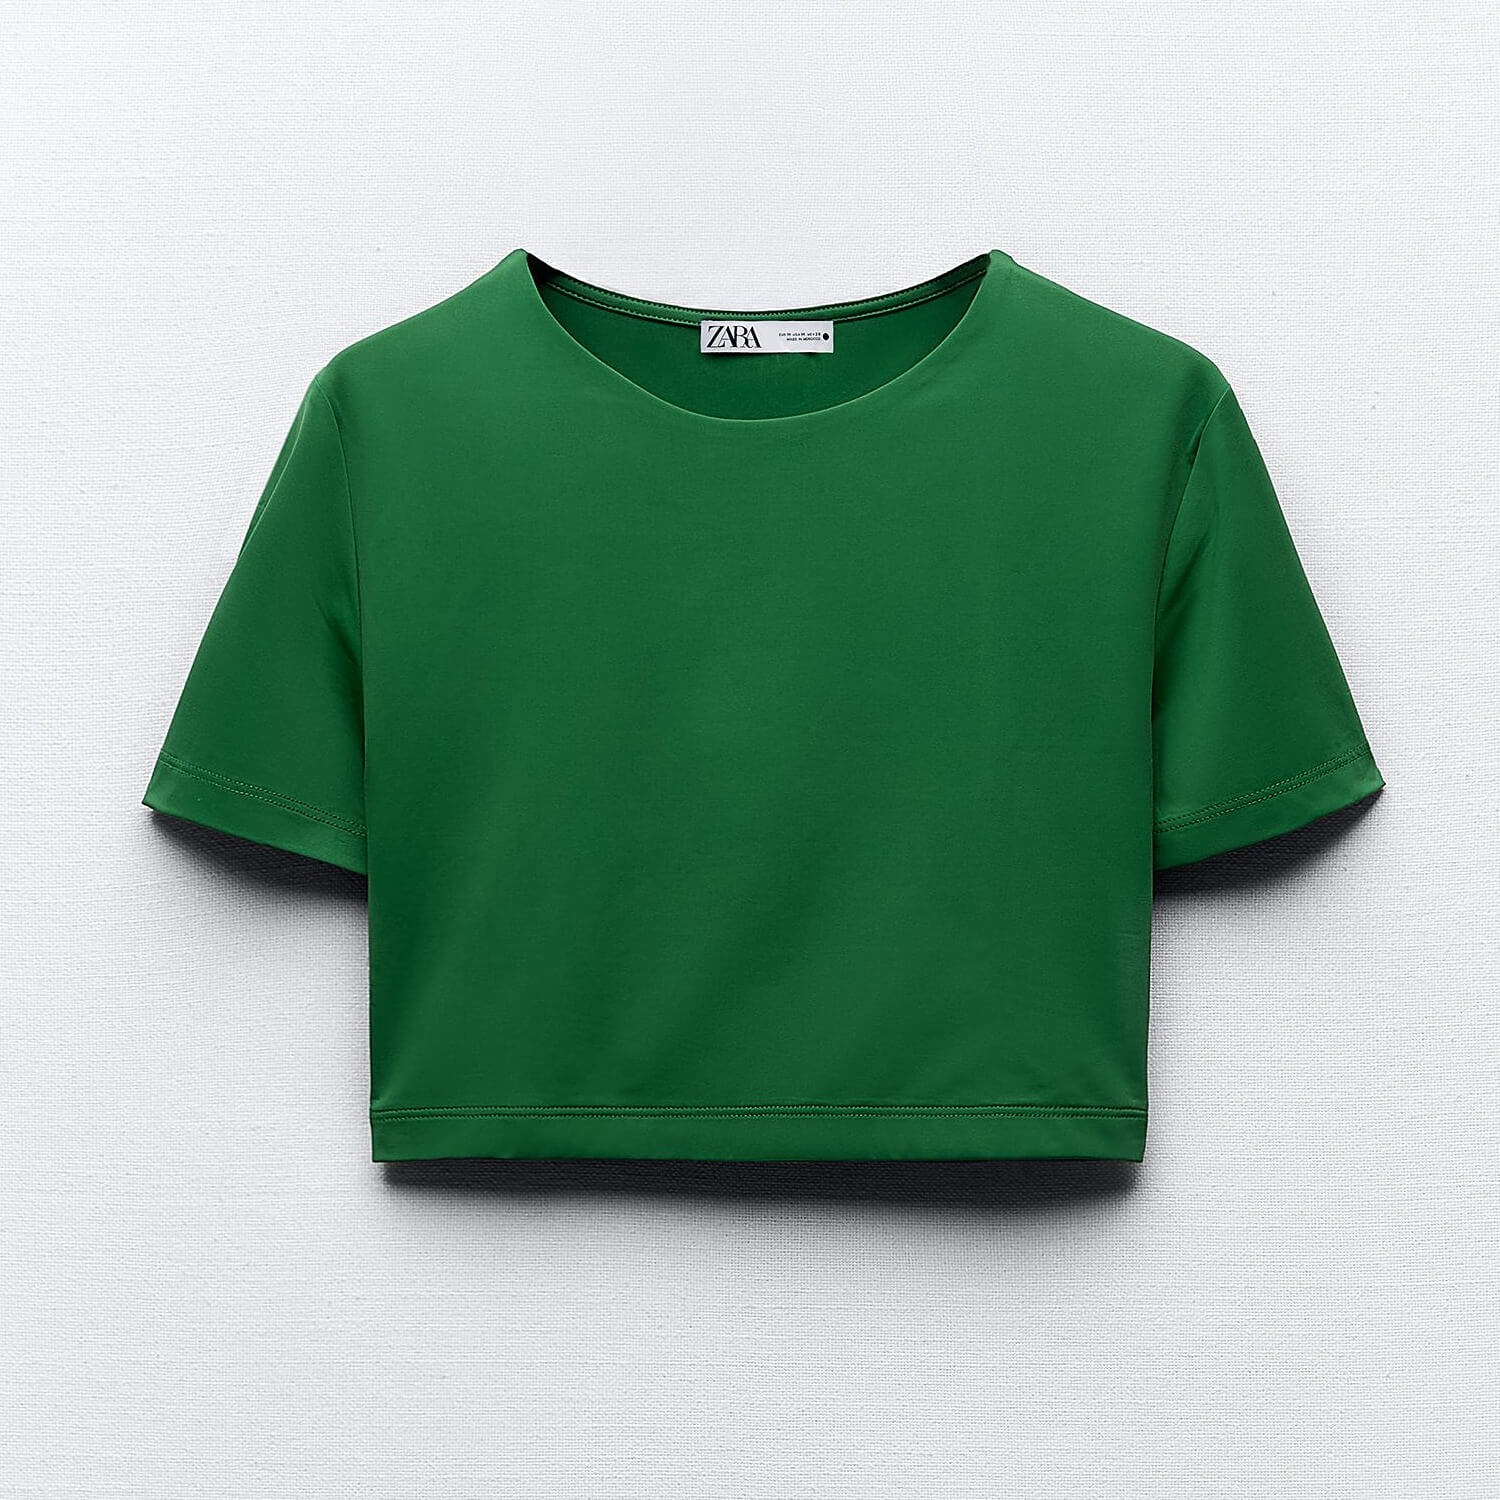 Кроп топ Zara Polyamide, зеленый цена и фото